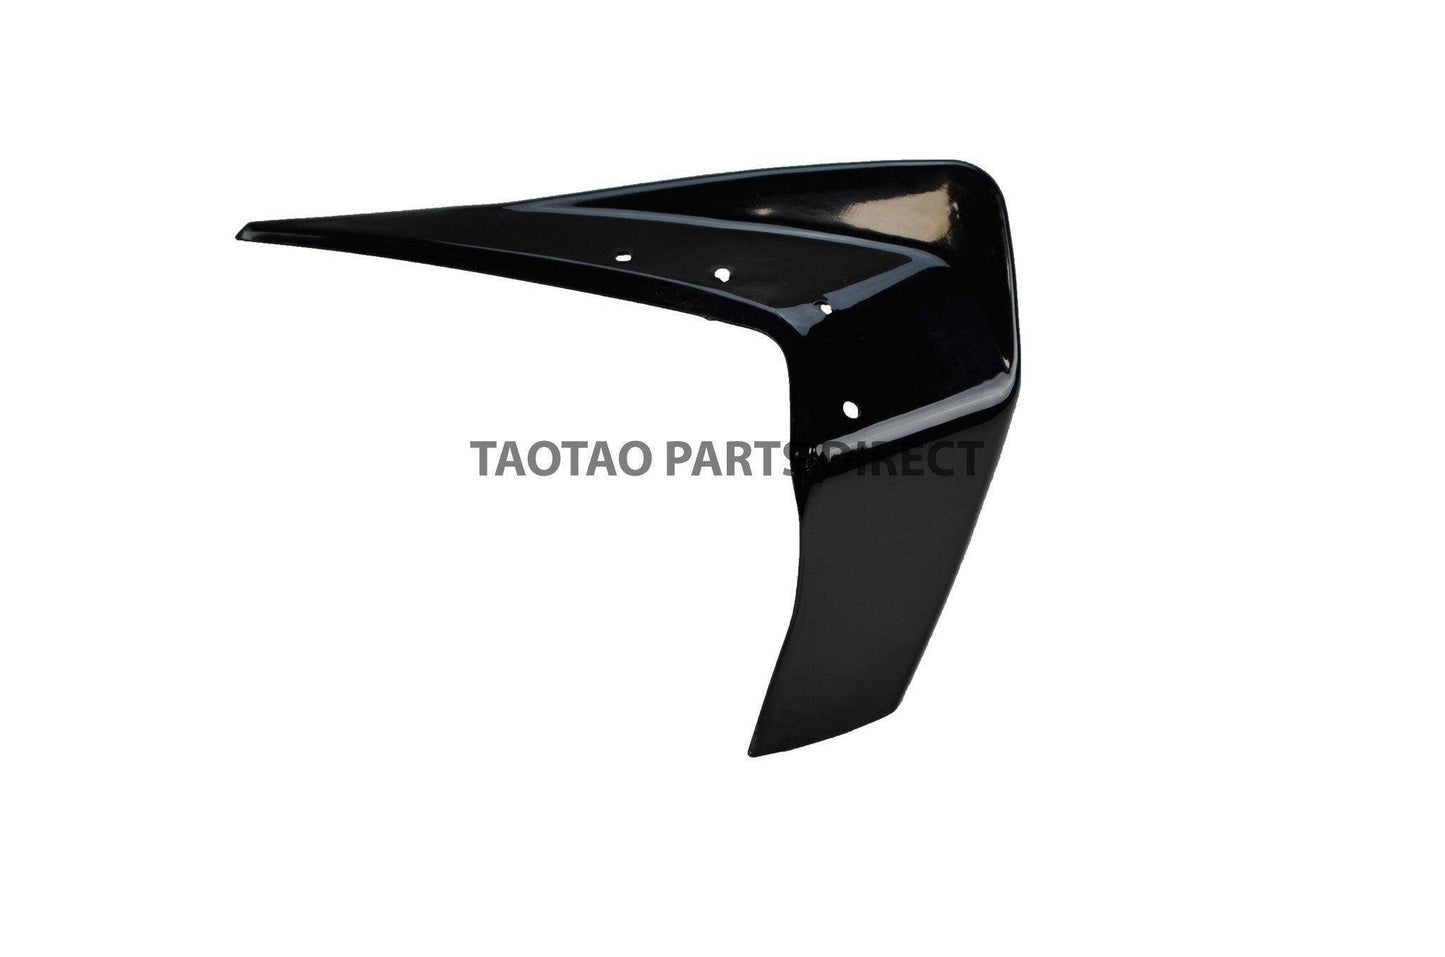 Cheetah Right Front Fender - TaoTao Parts Direct